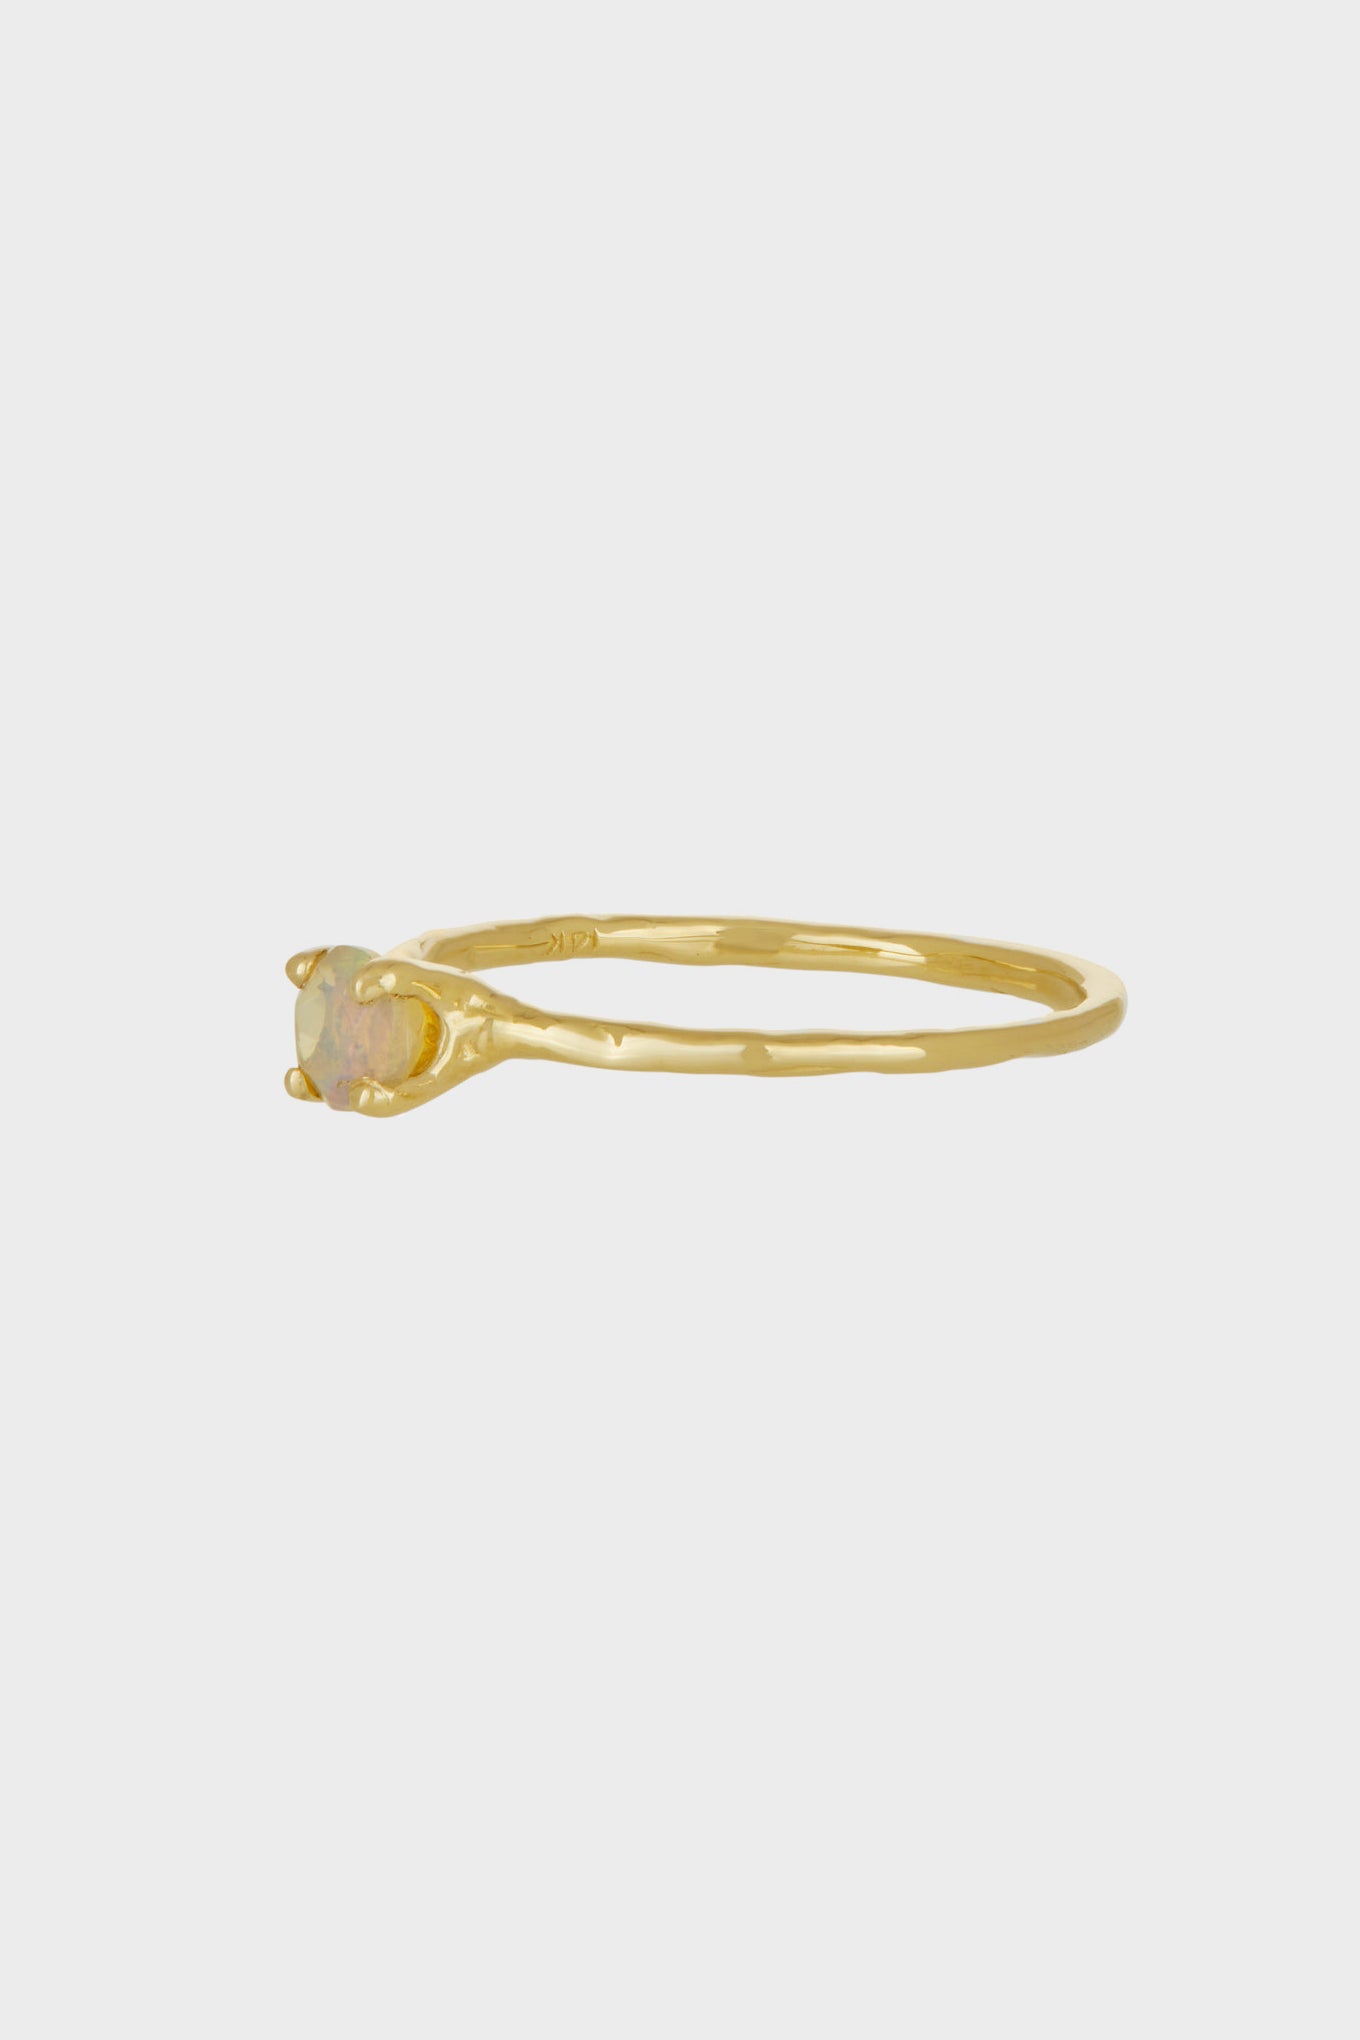 Princess Ring in Opal & 14k Yellow Gold by Mondo Mondo